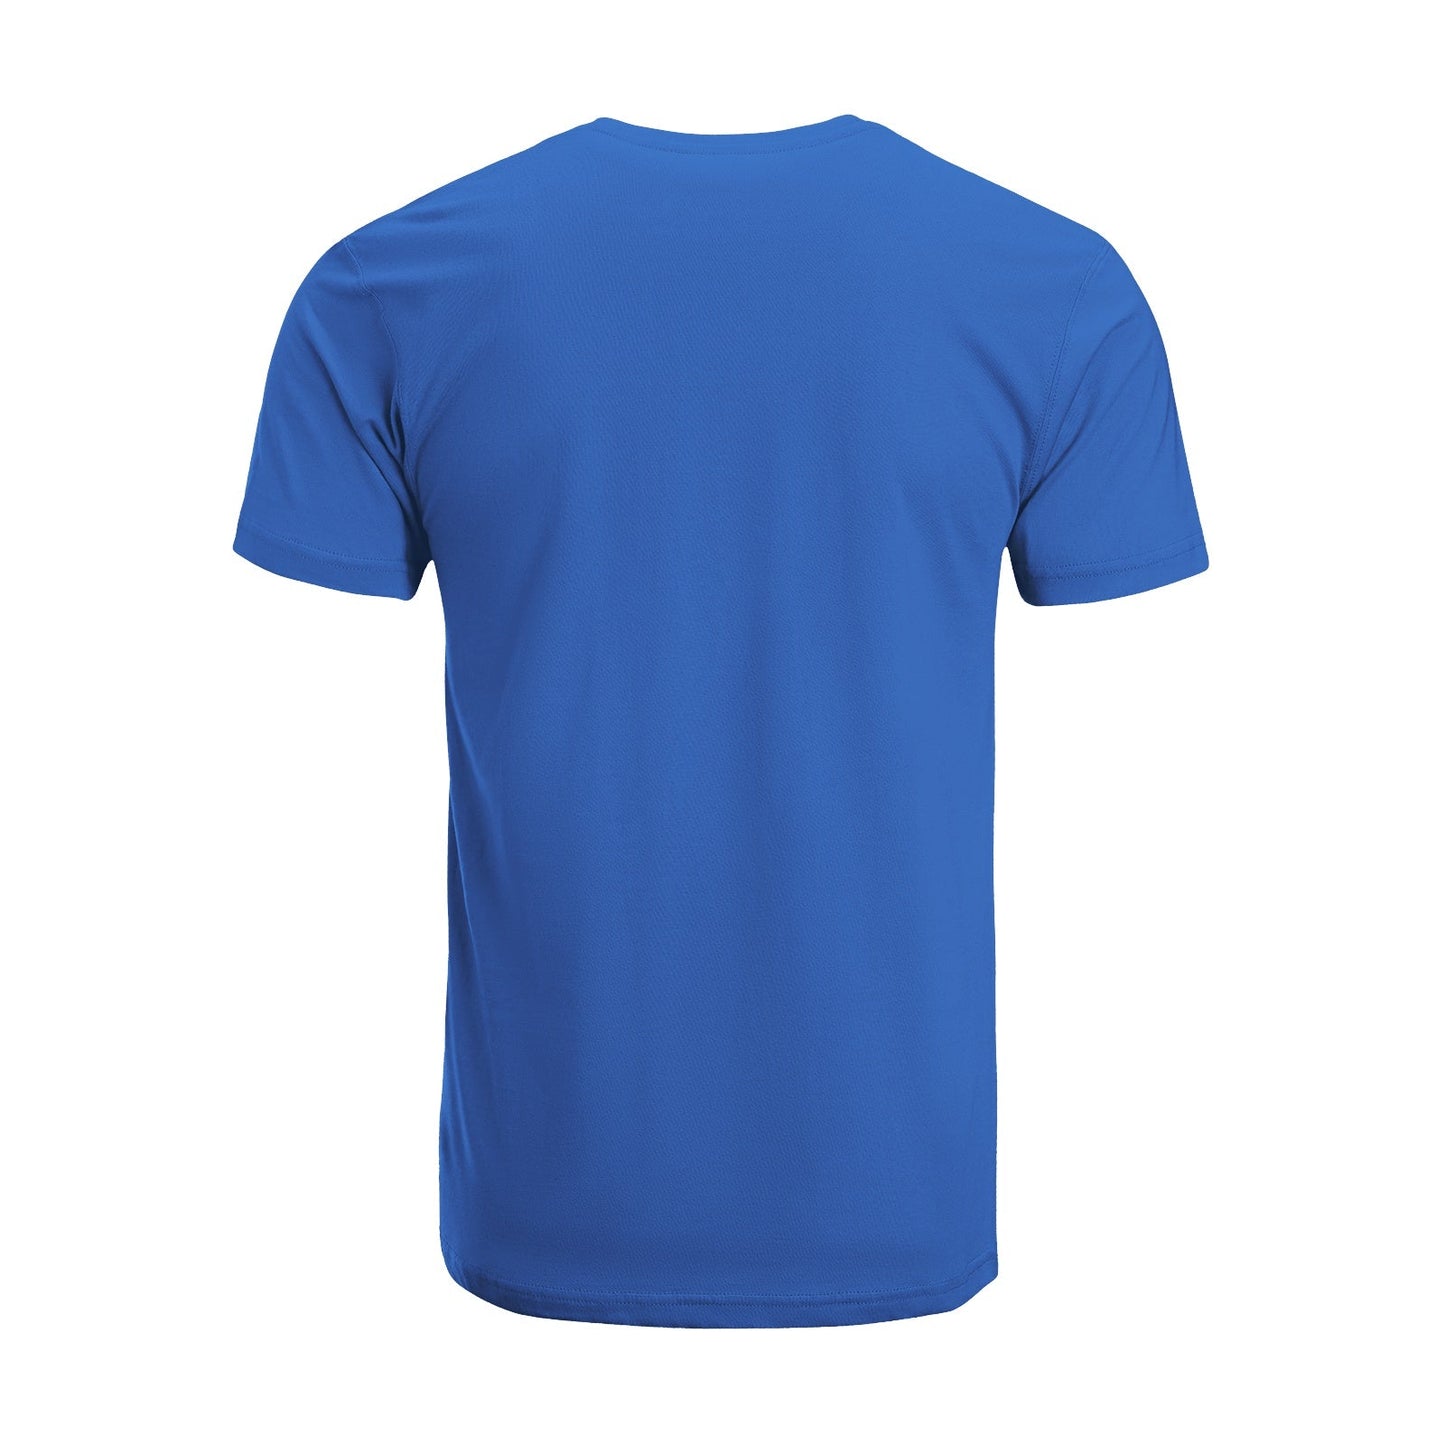 Unisex Short Sleeve Crew Neck Cotton Jersey T-Shirt MOM 03